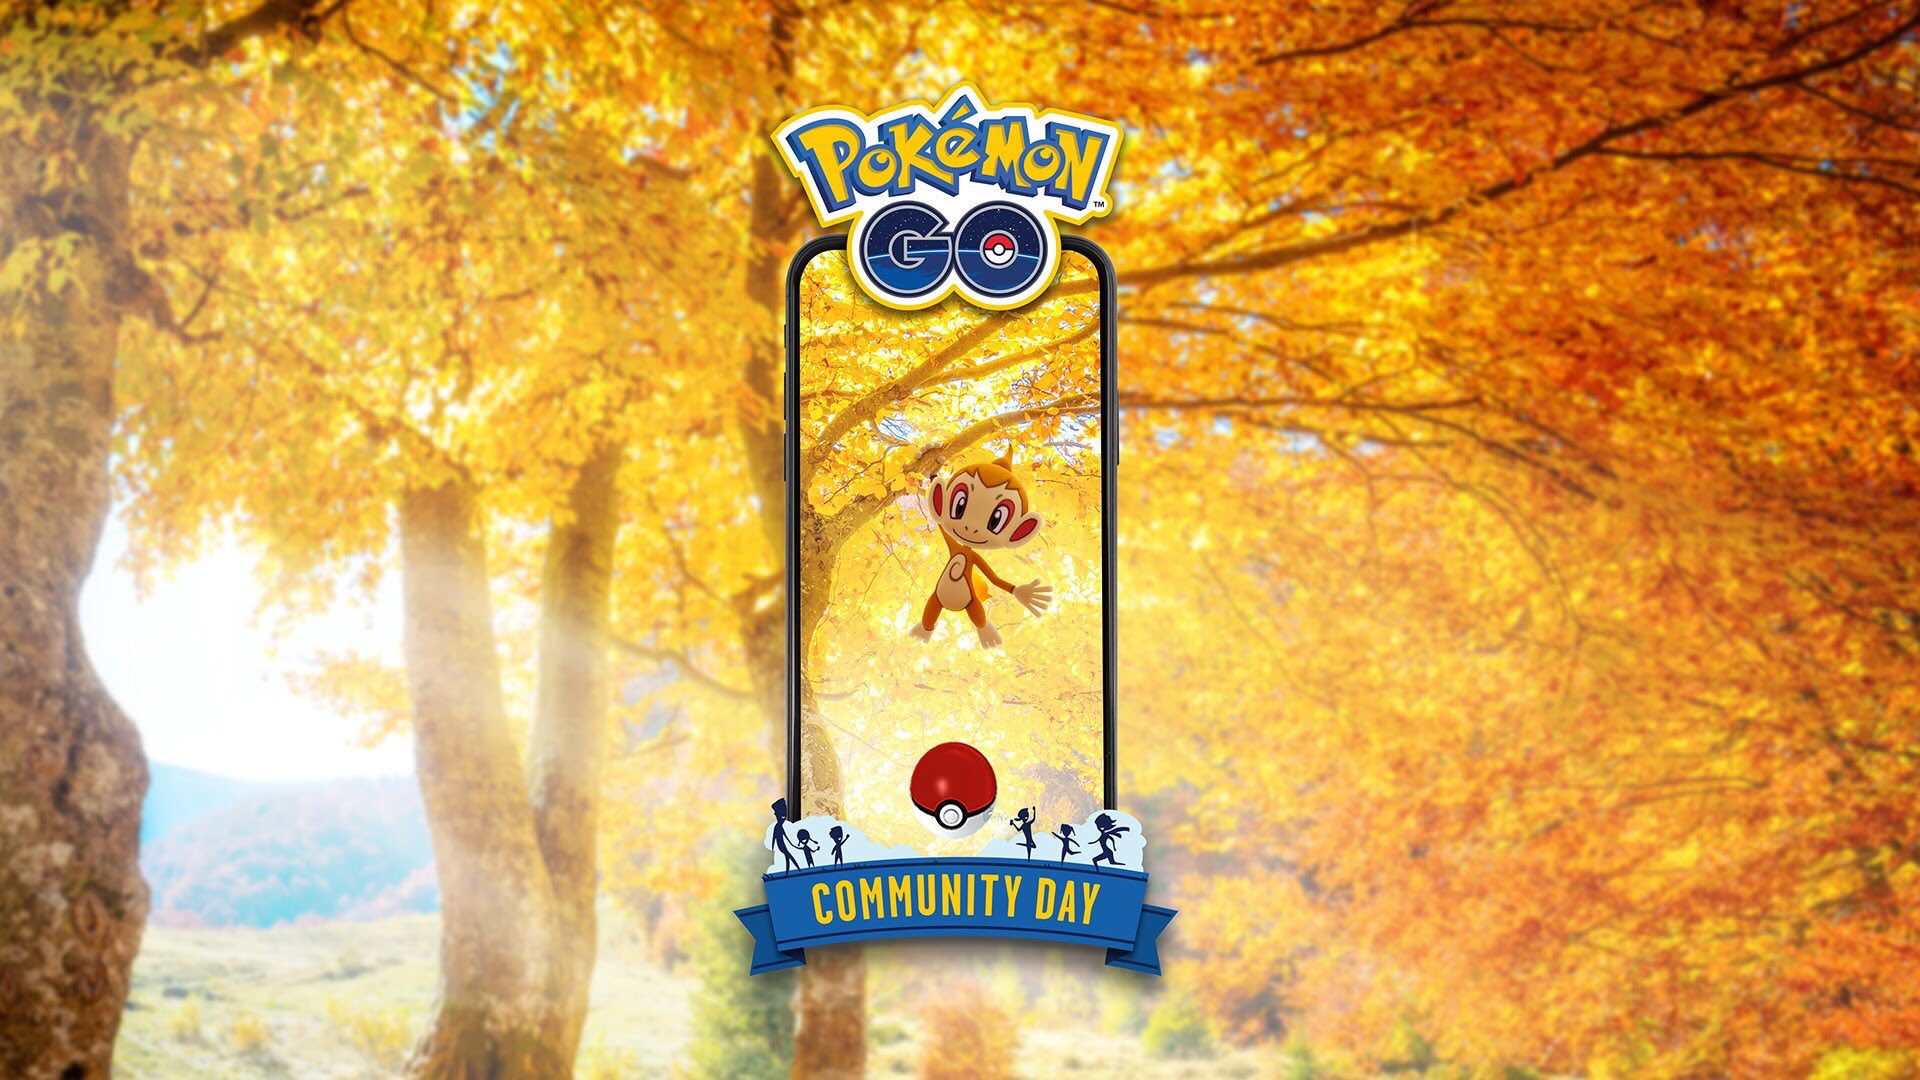 Pokemon Go Community Day News On Twitter Happy Pokemongocommunityday Trainers Have Fun Today And Stay Warm